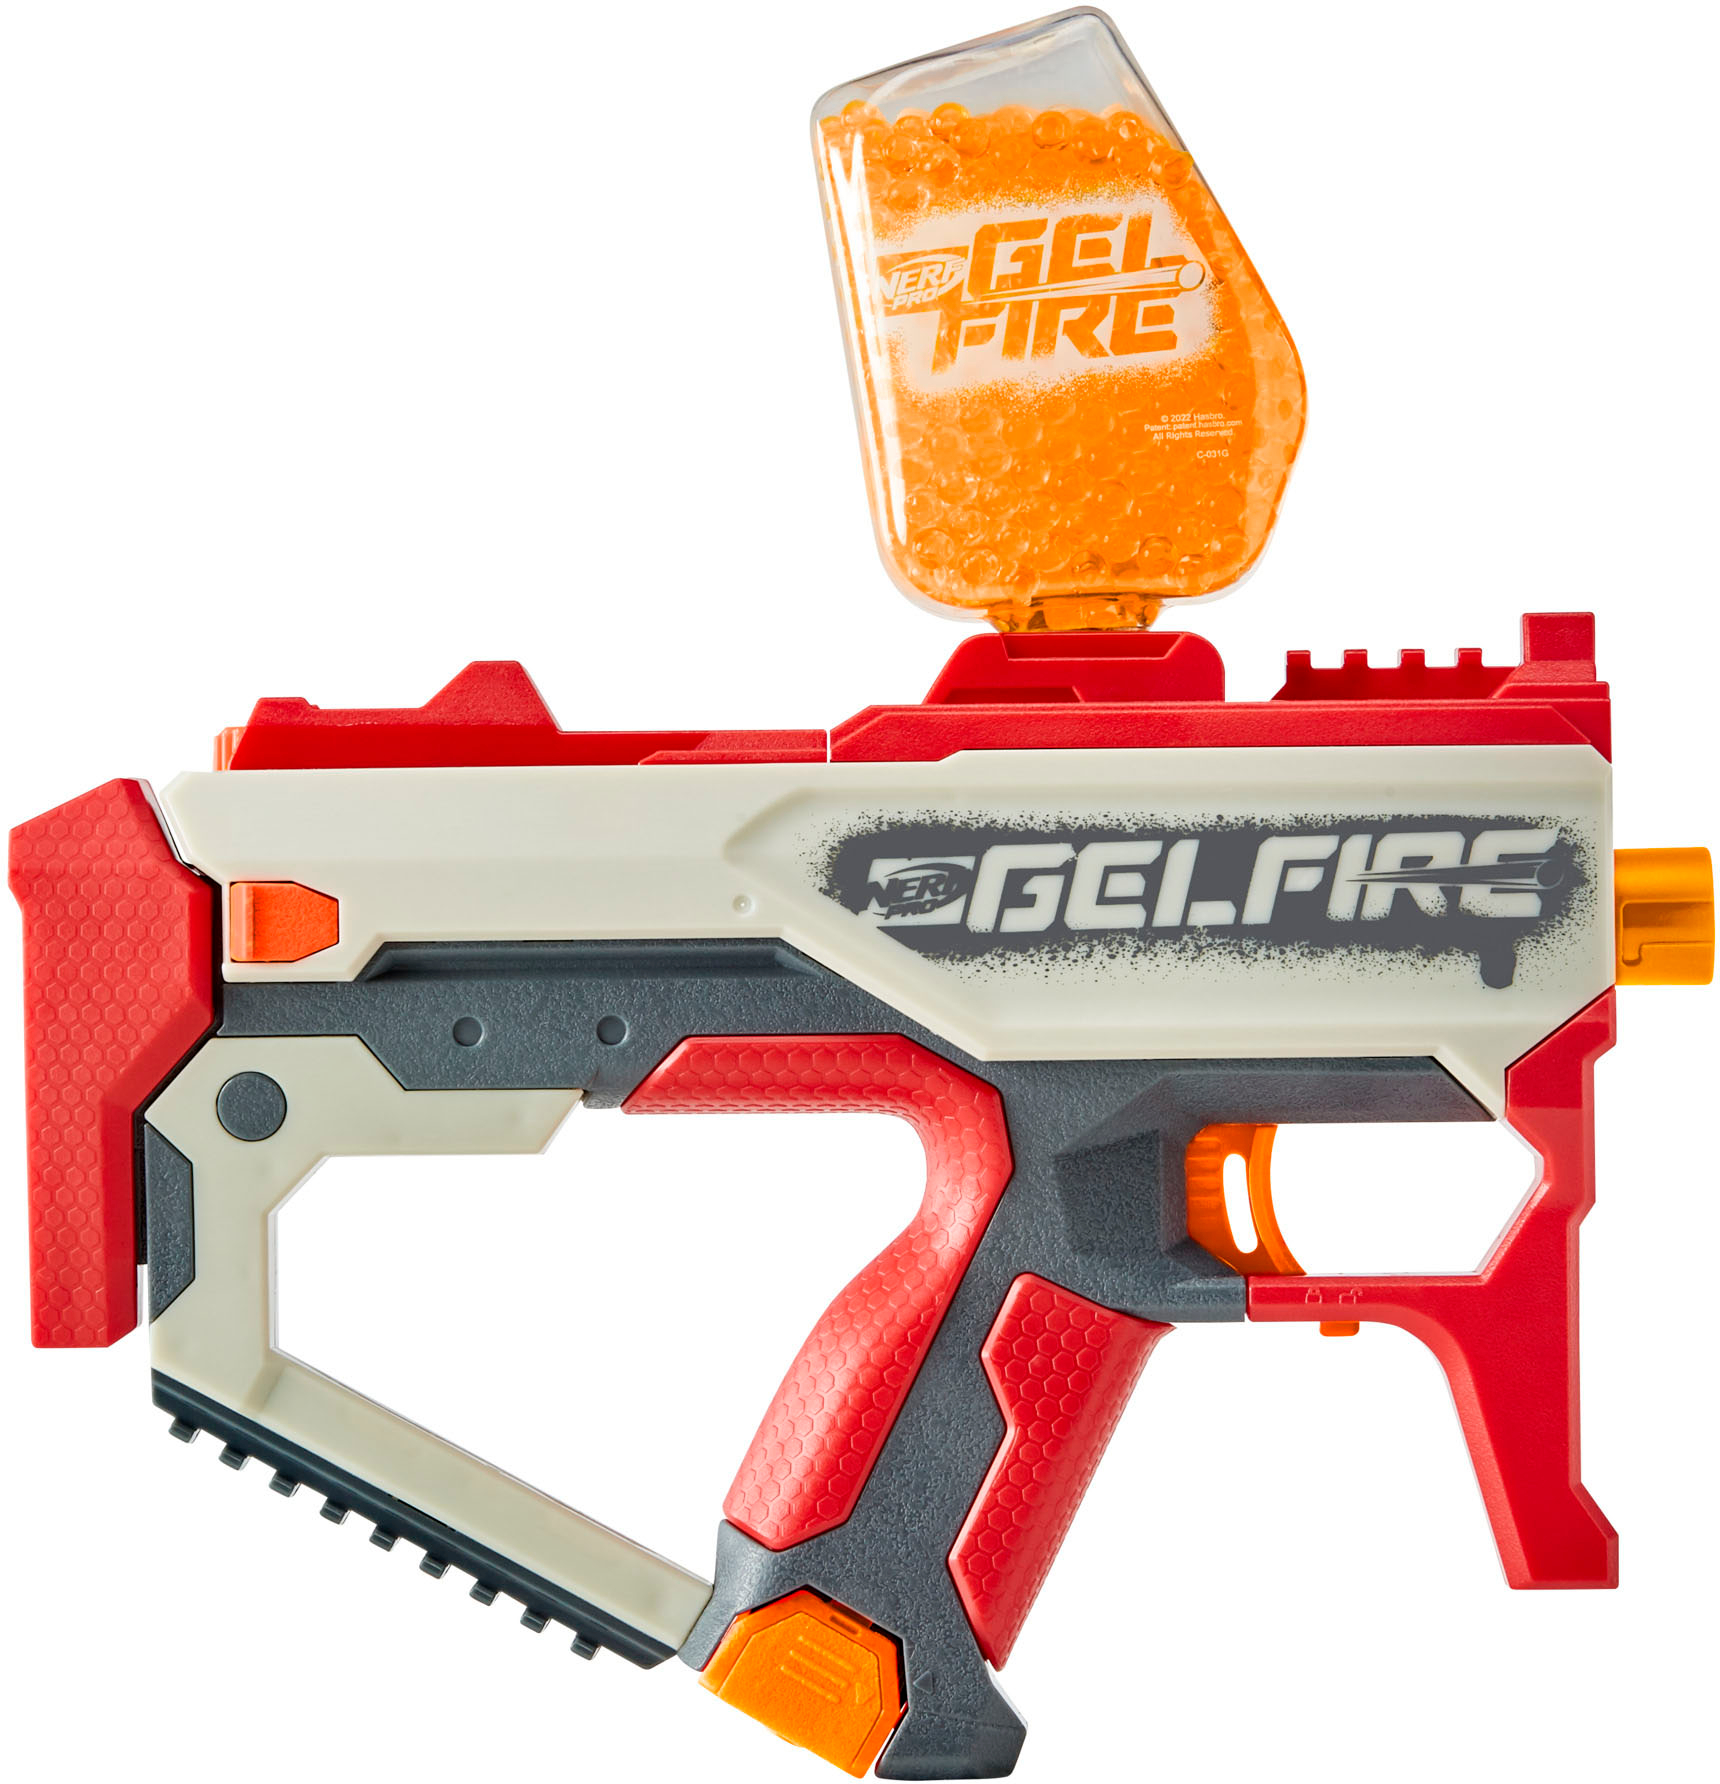 Nerf Pro Gelfire Mythic Blaster Is on Sale - IGN